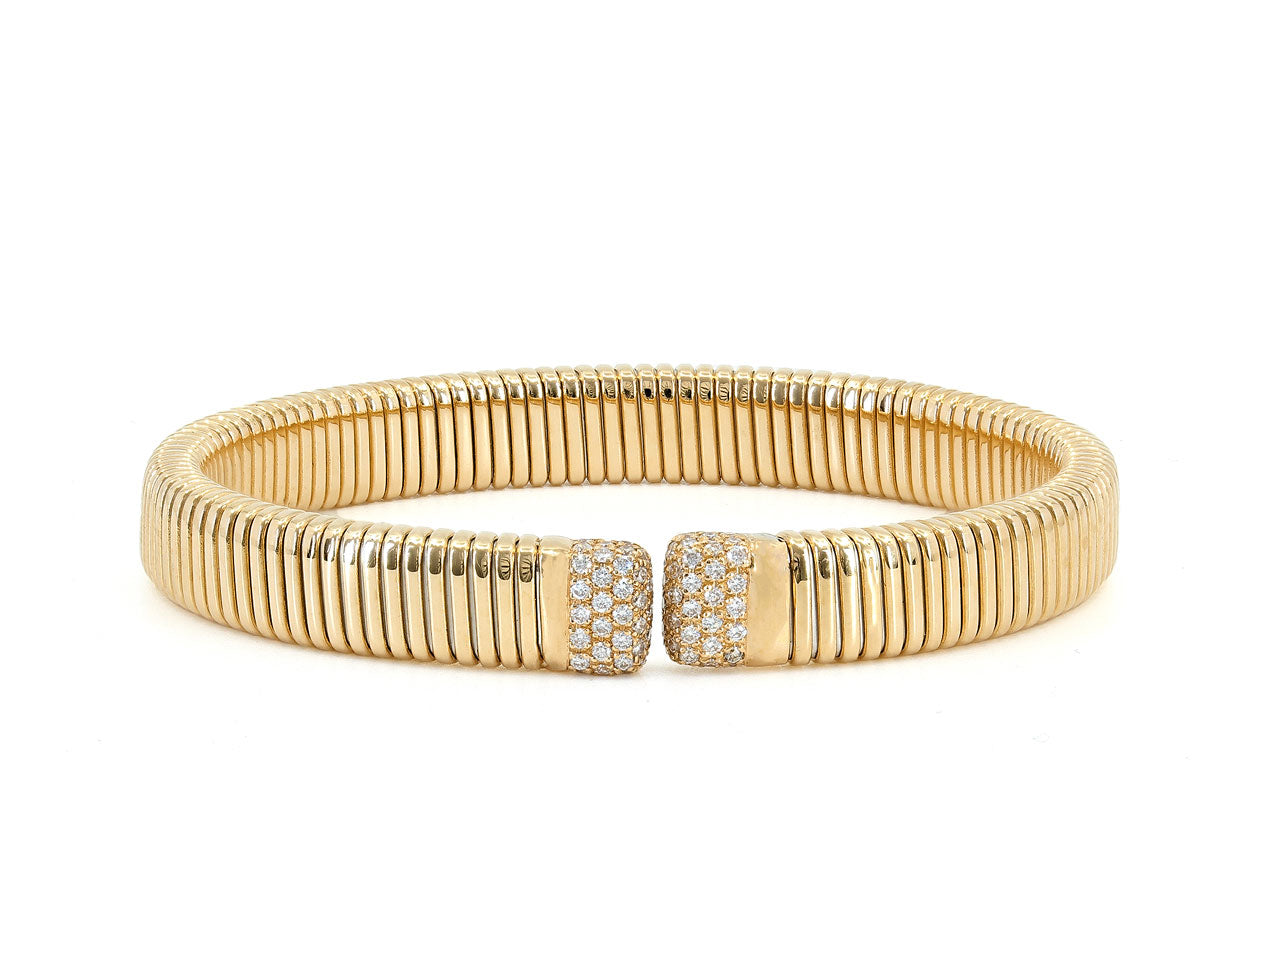 Tubogas Bracelet with Diamonds, Medium, by Beladora, in 18K Gold